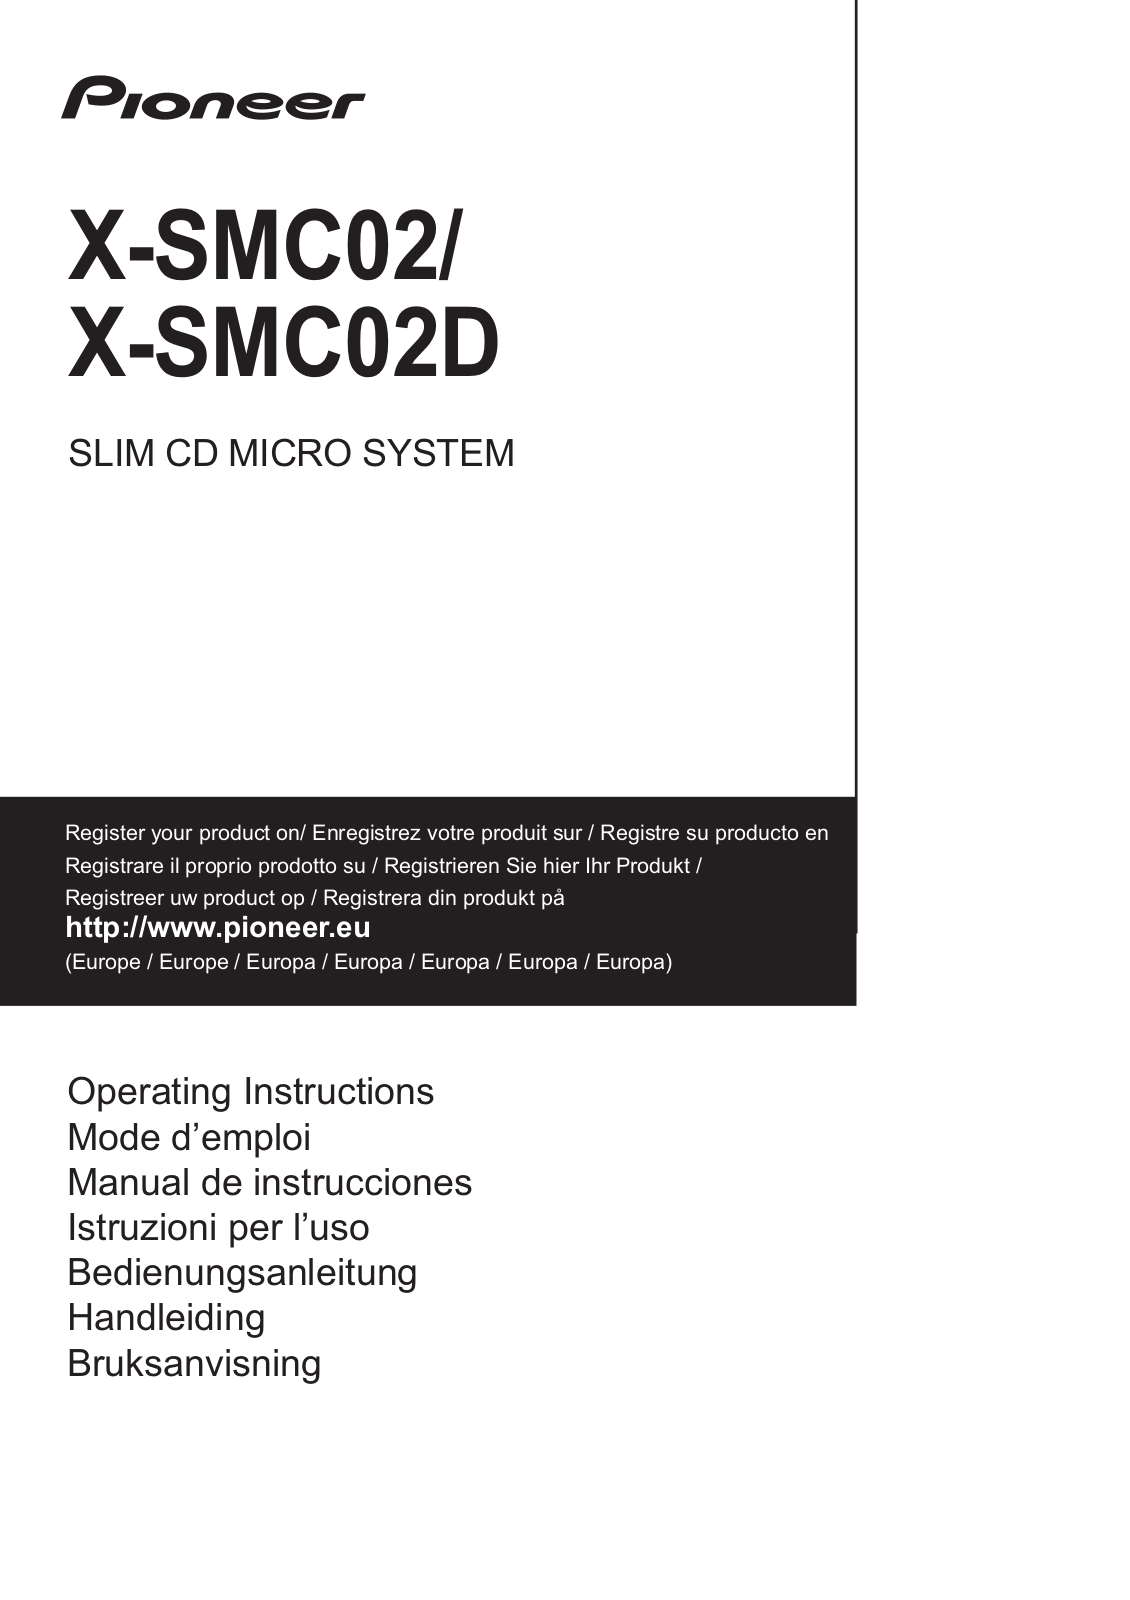 Pioneer X-SMC02 operation manual